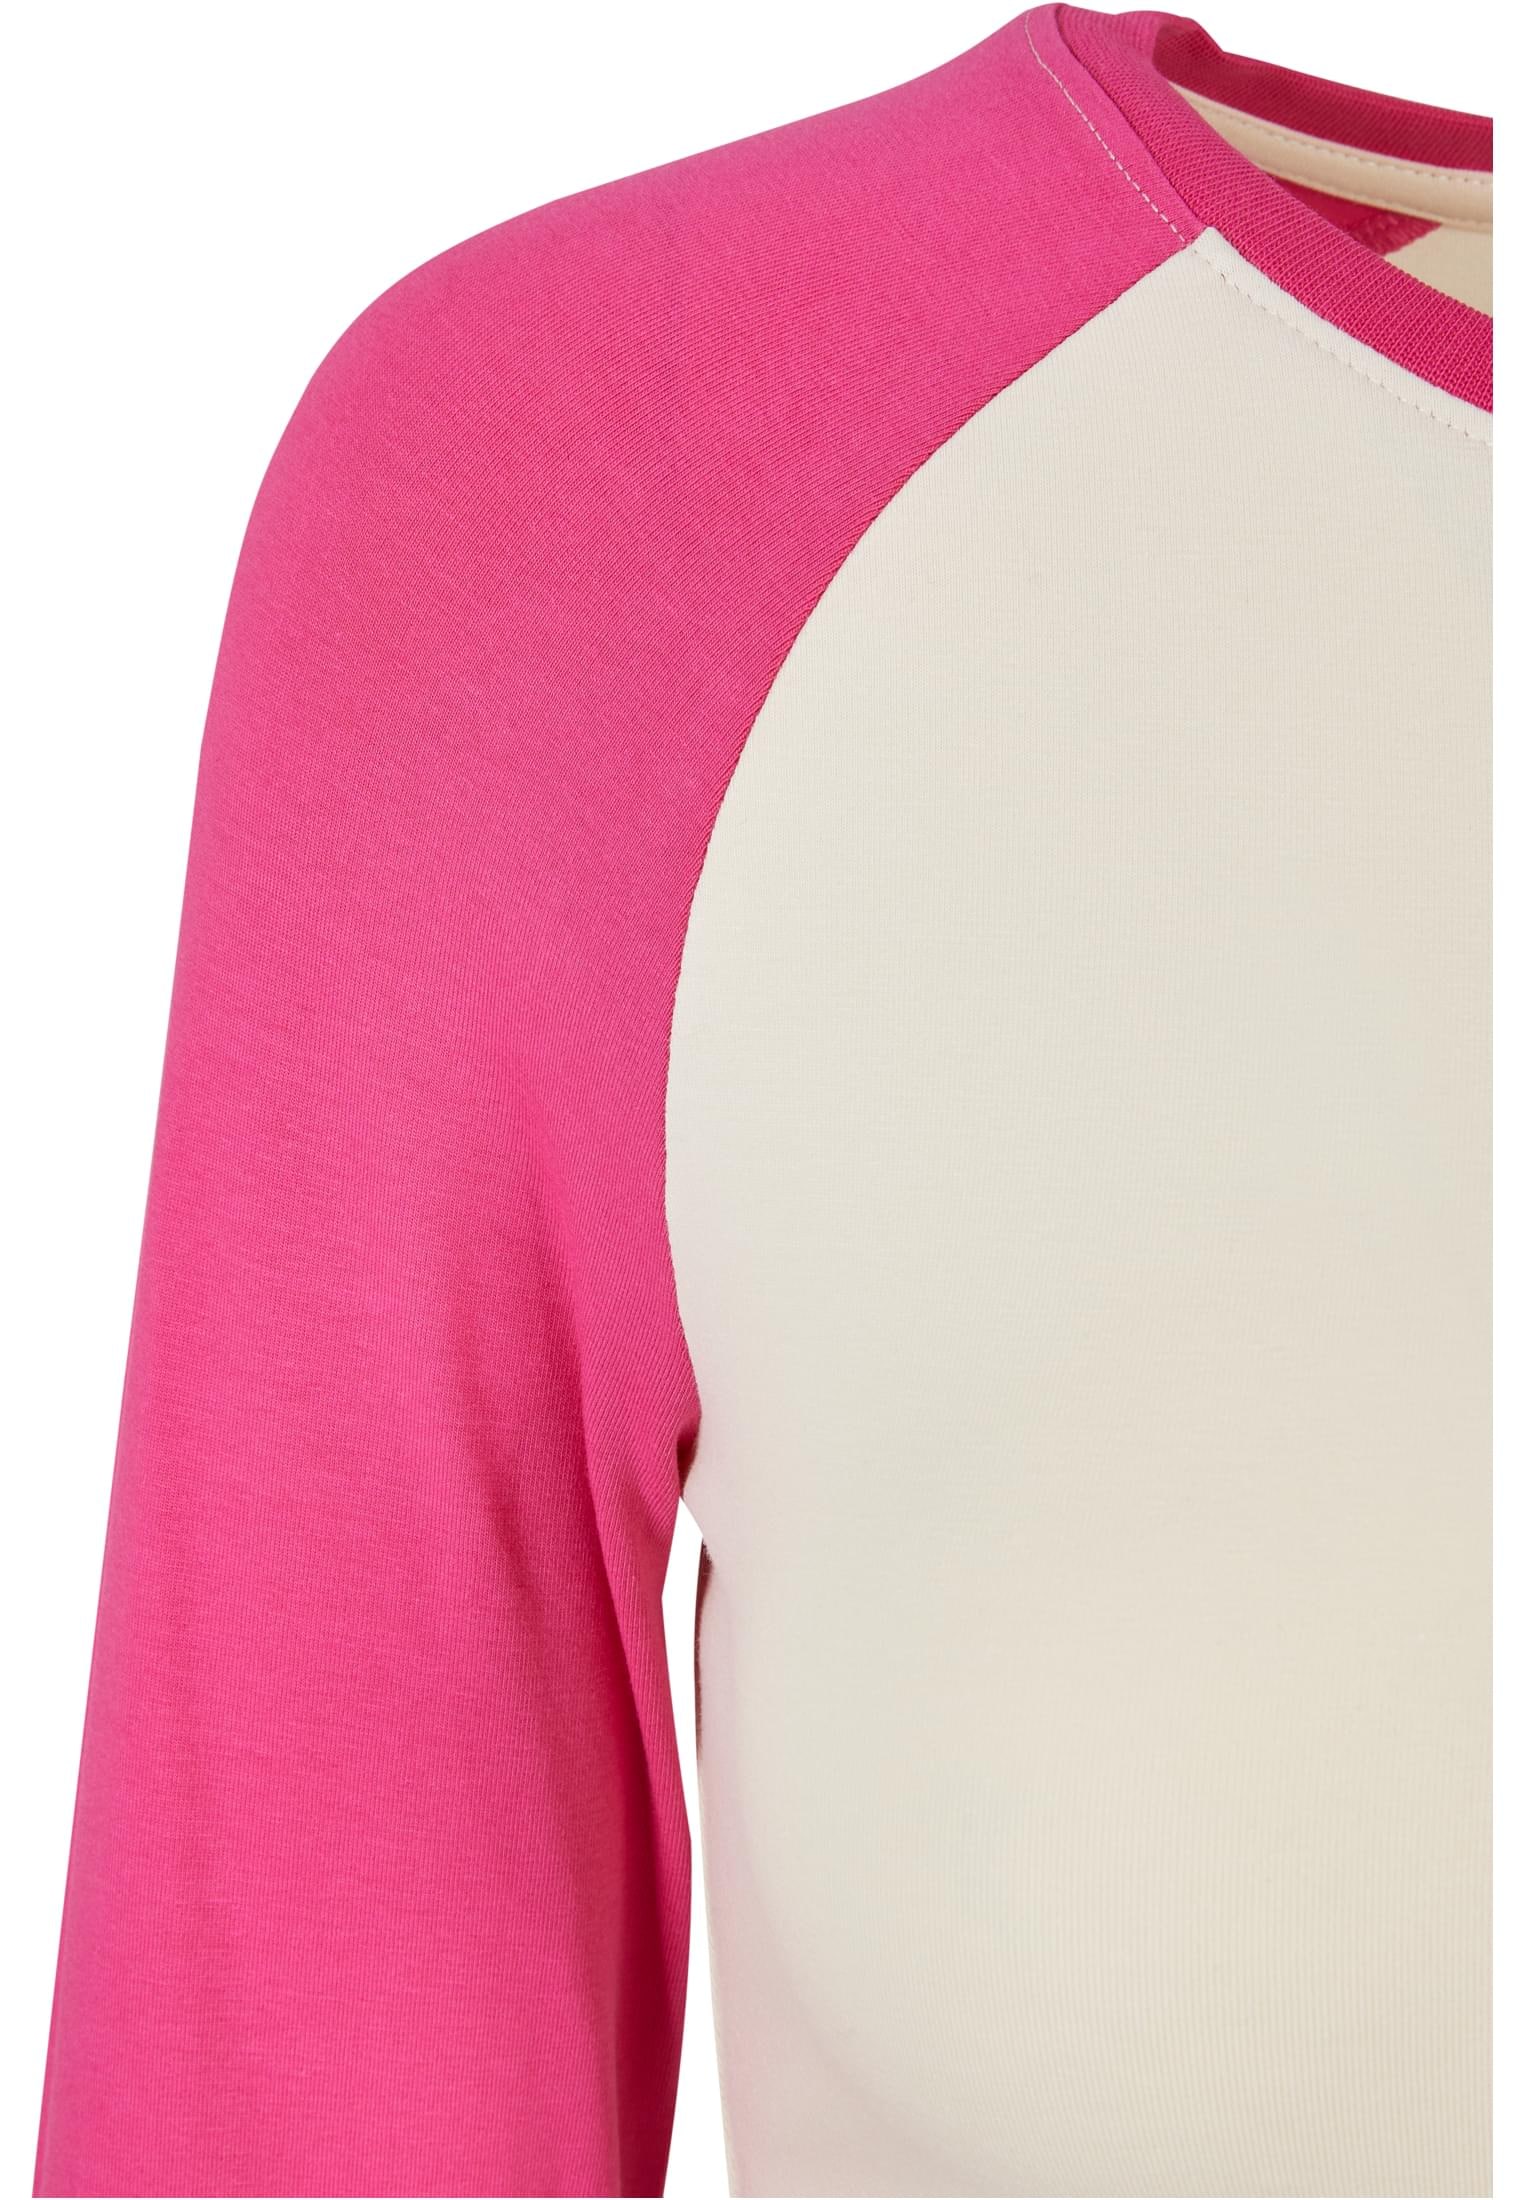 URBAN CLASSICS Langarmshirt »Damen Ladies Organic Cropped Retro Baseball  Longsleeve«, (1 tlg.) online kaufen | I\'m walking